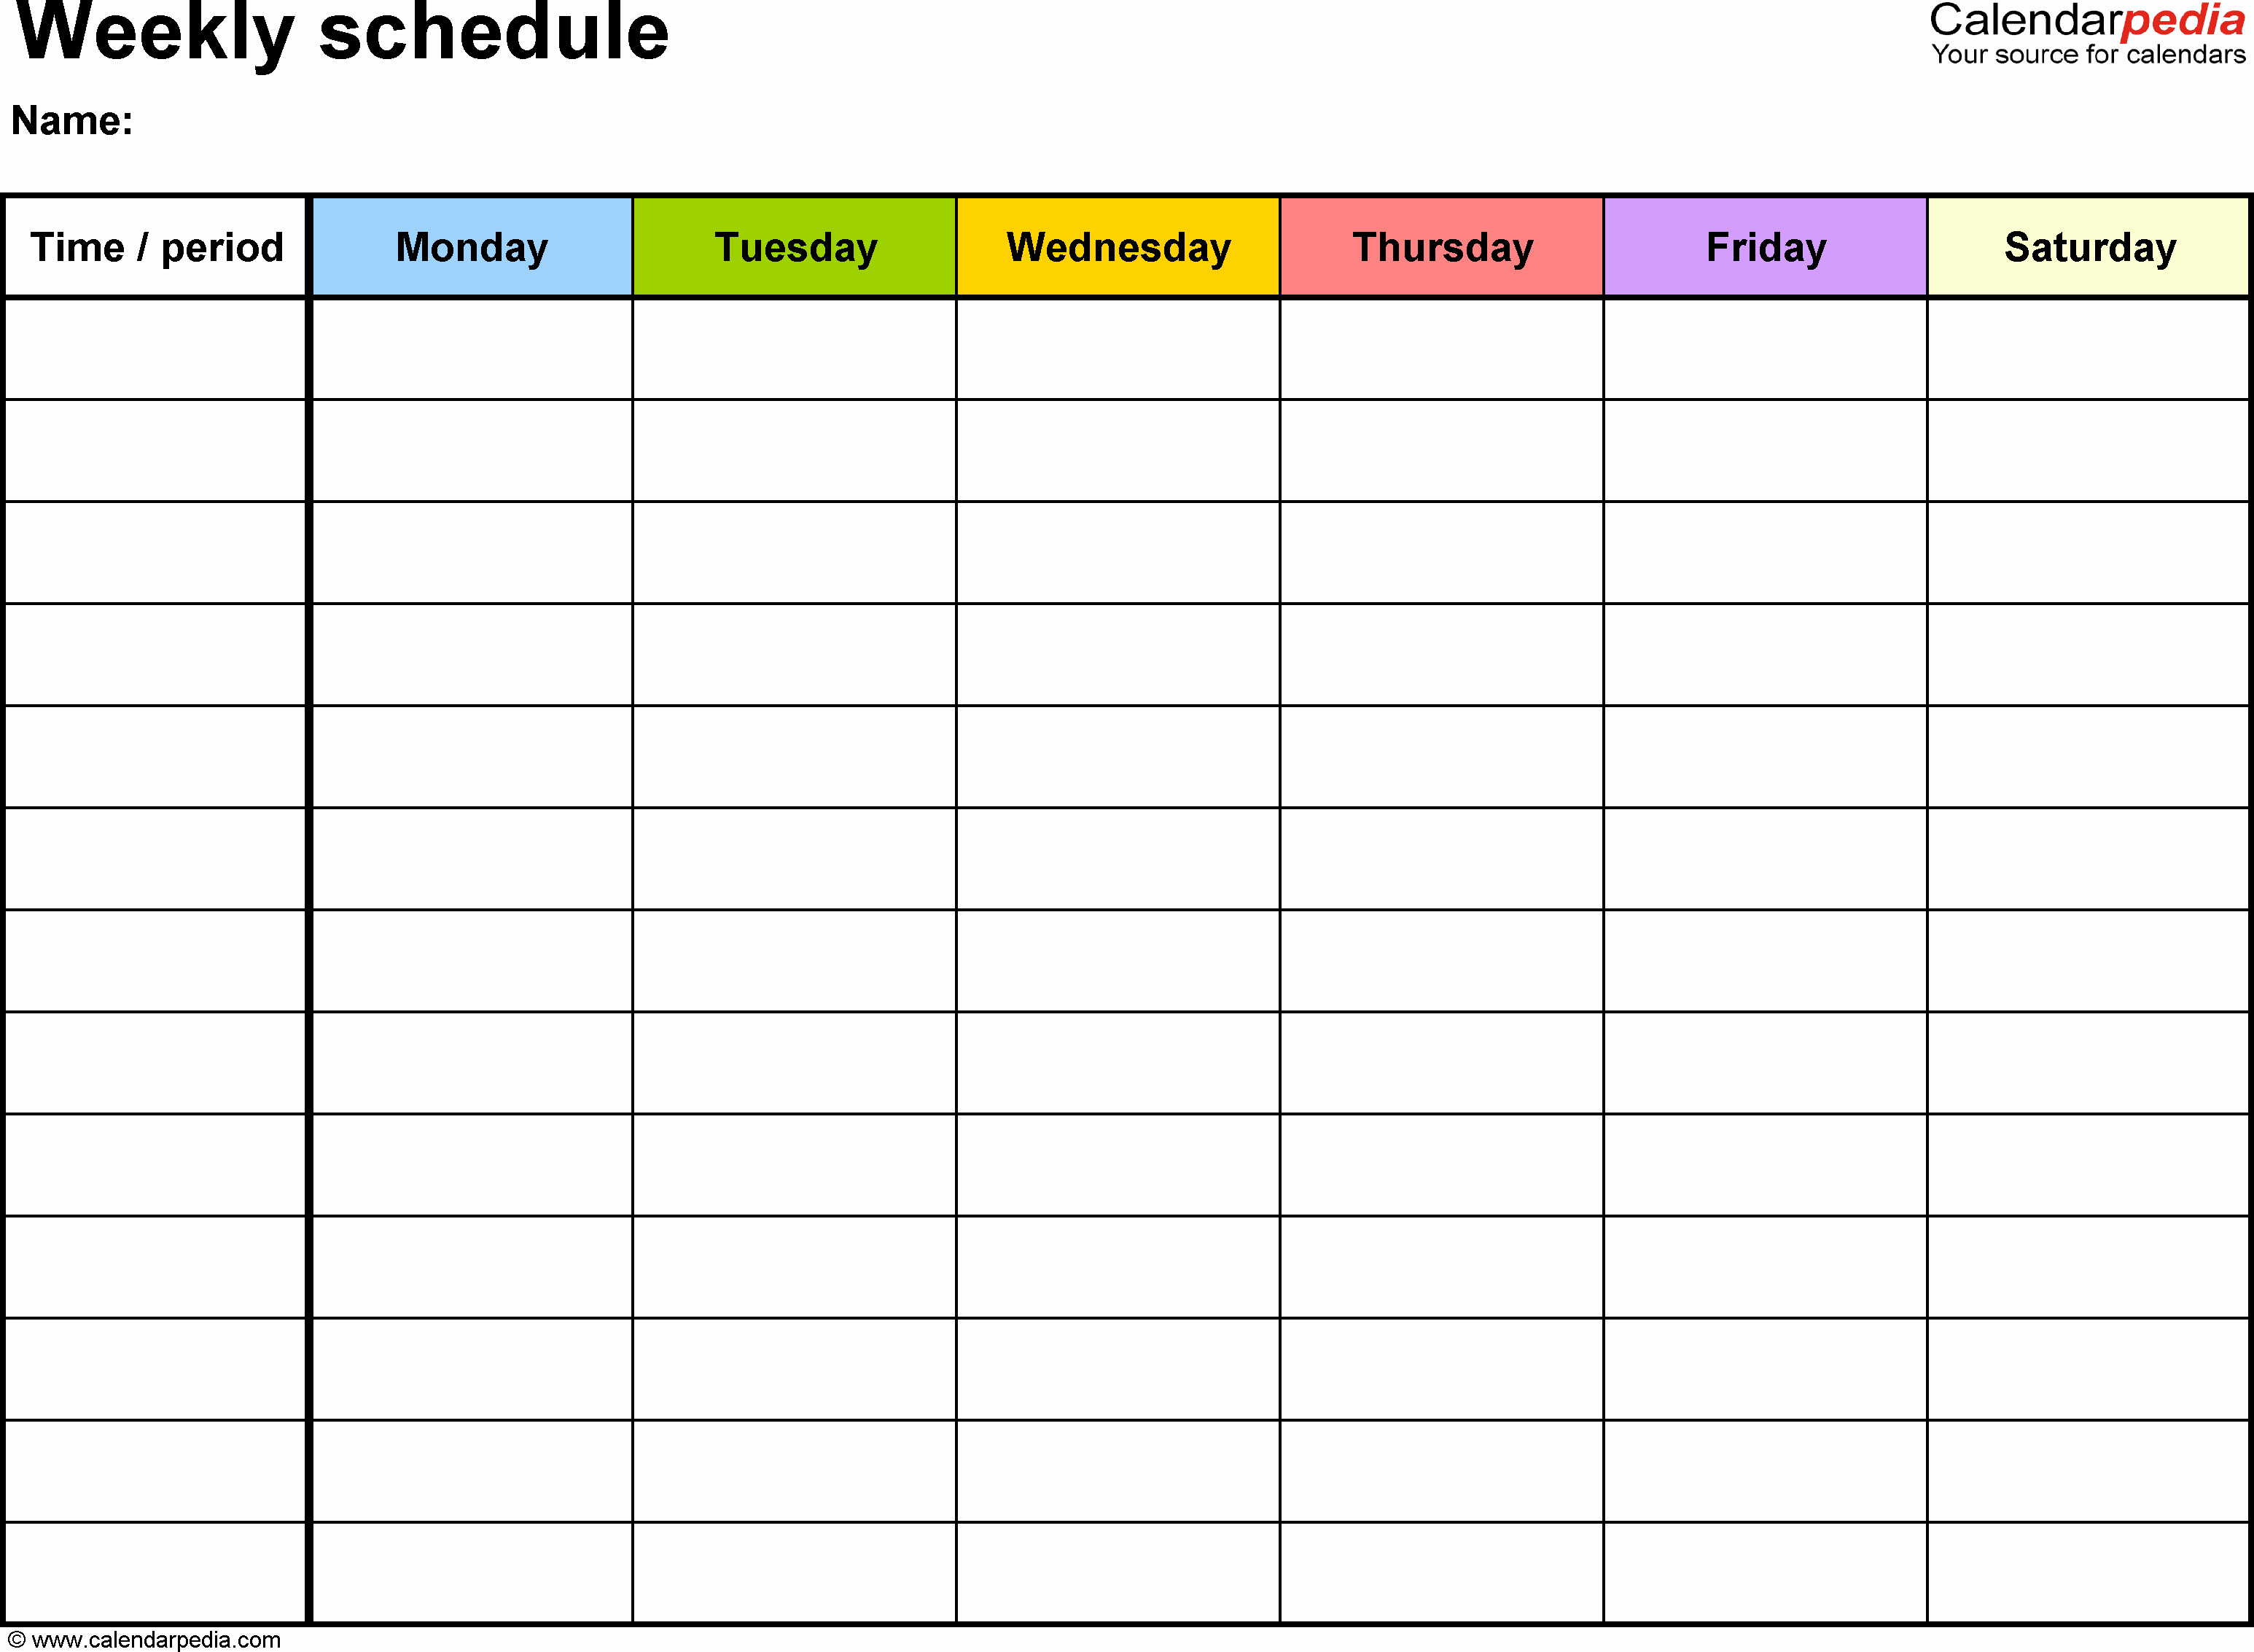 Weekly Workout Schedule Template Luxury 12 Week Workout Calendar Template